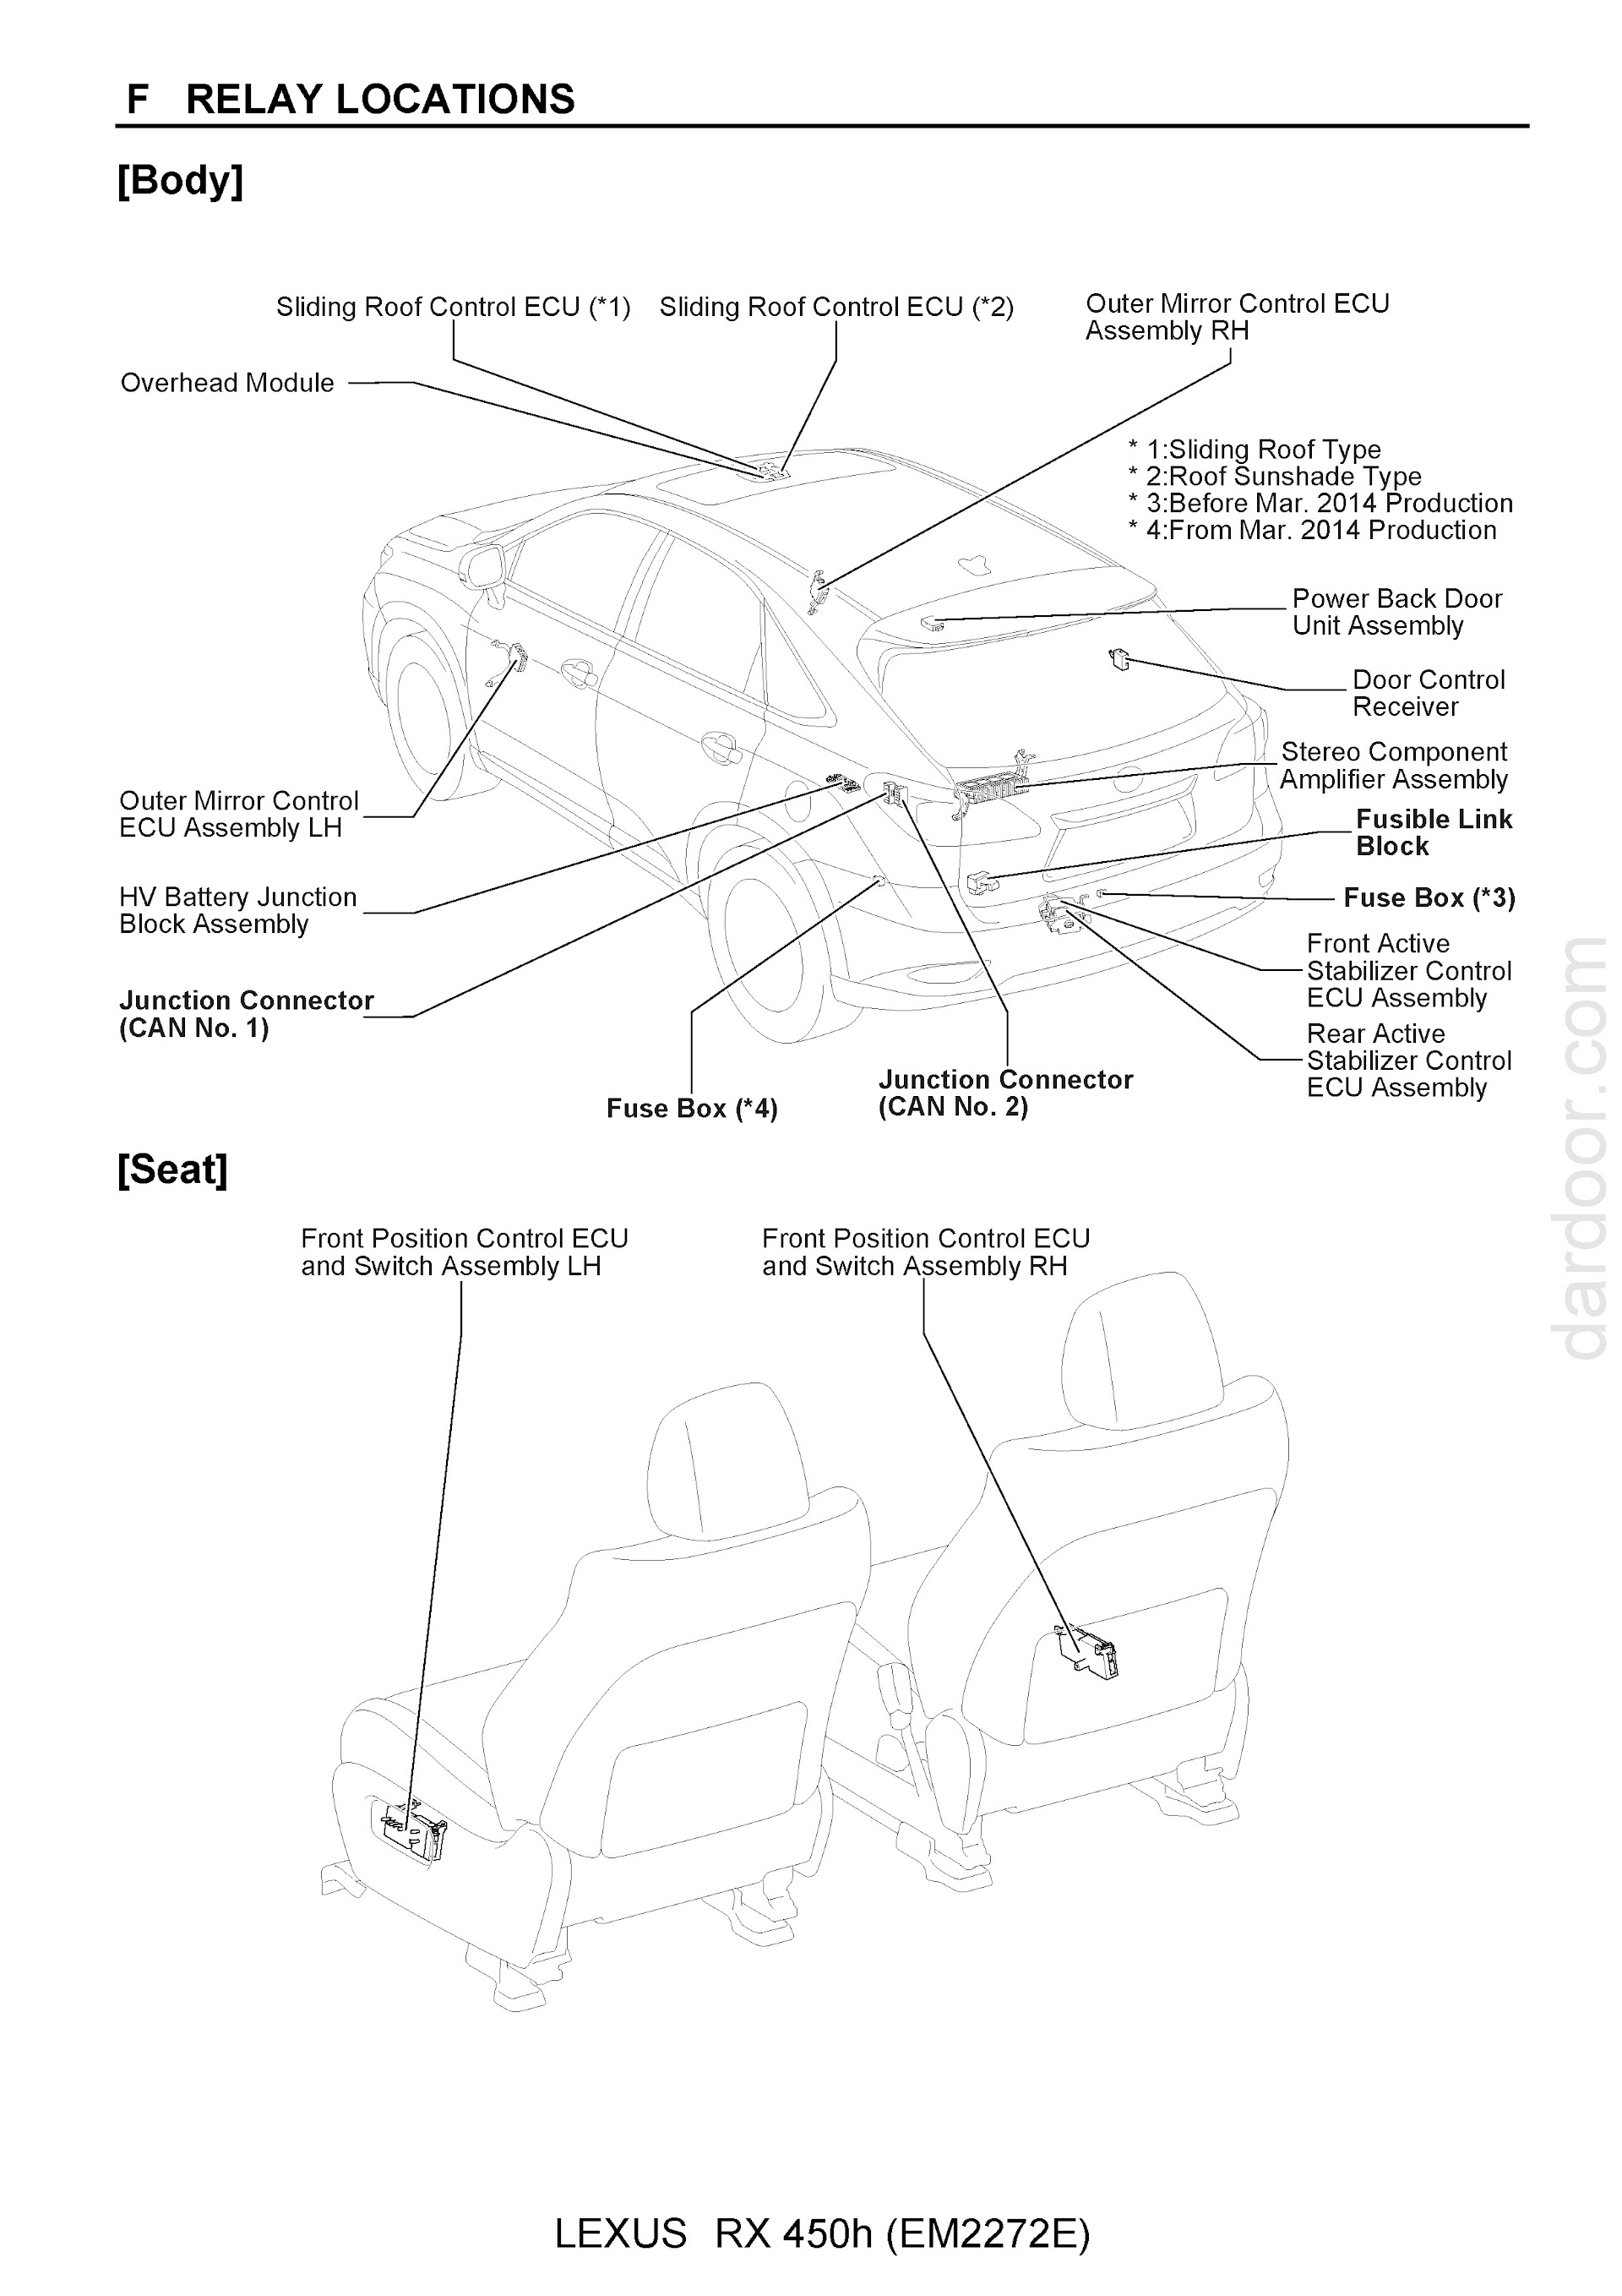 2015 Lexus RX450h Wiring Diagram, Relay Location